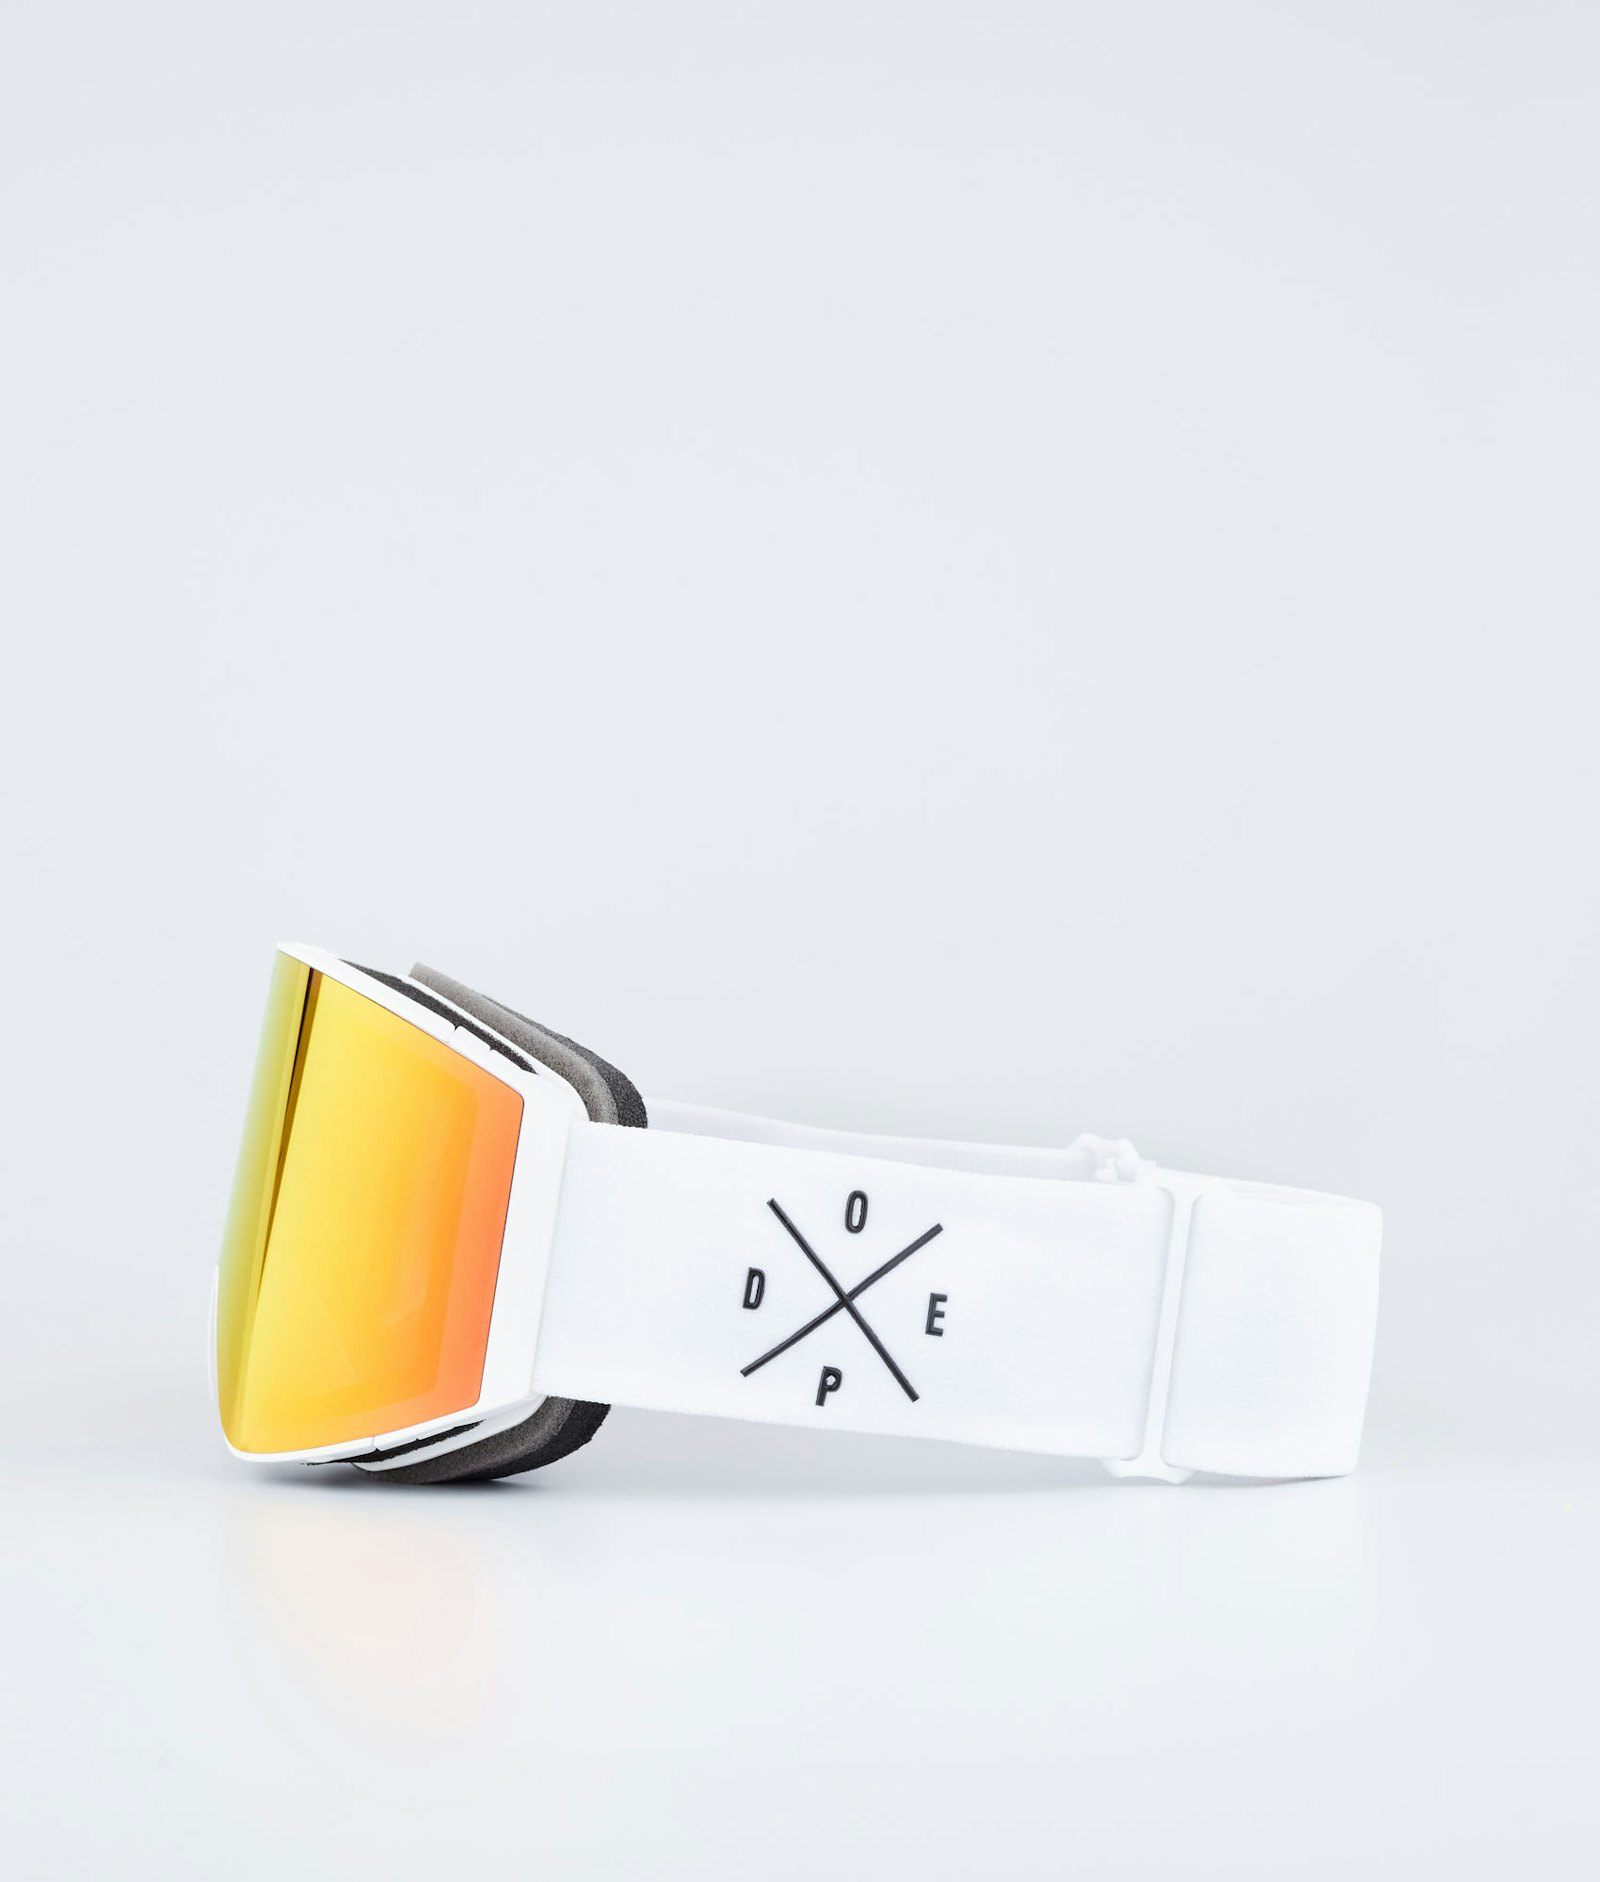 Sight 2021 Ski Goggles White/Red Mirror